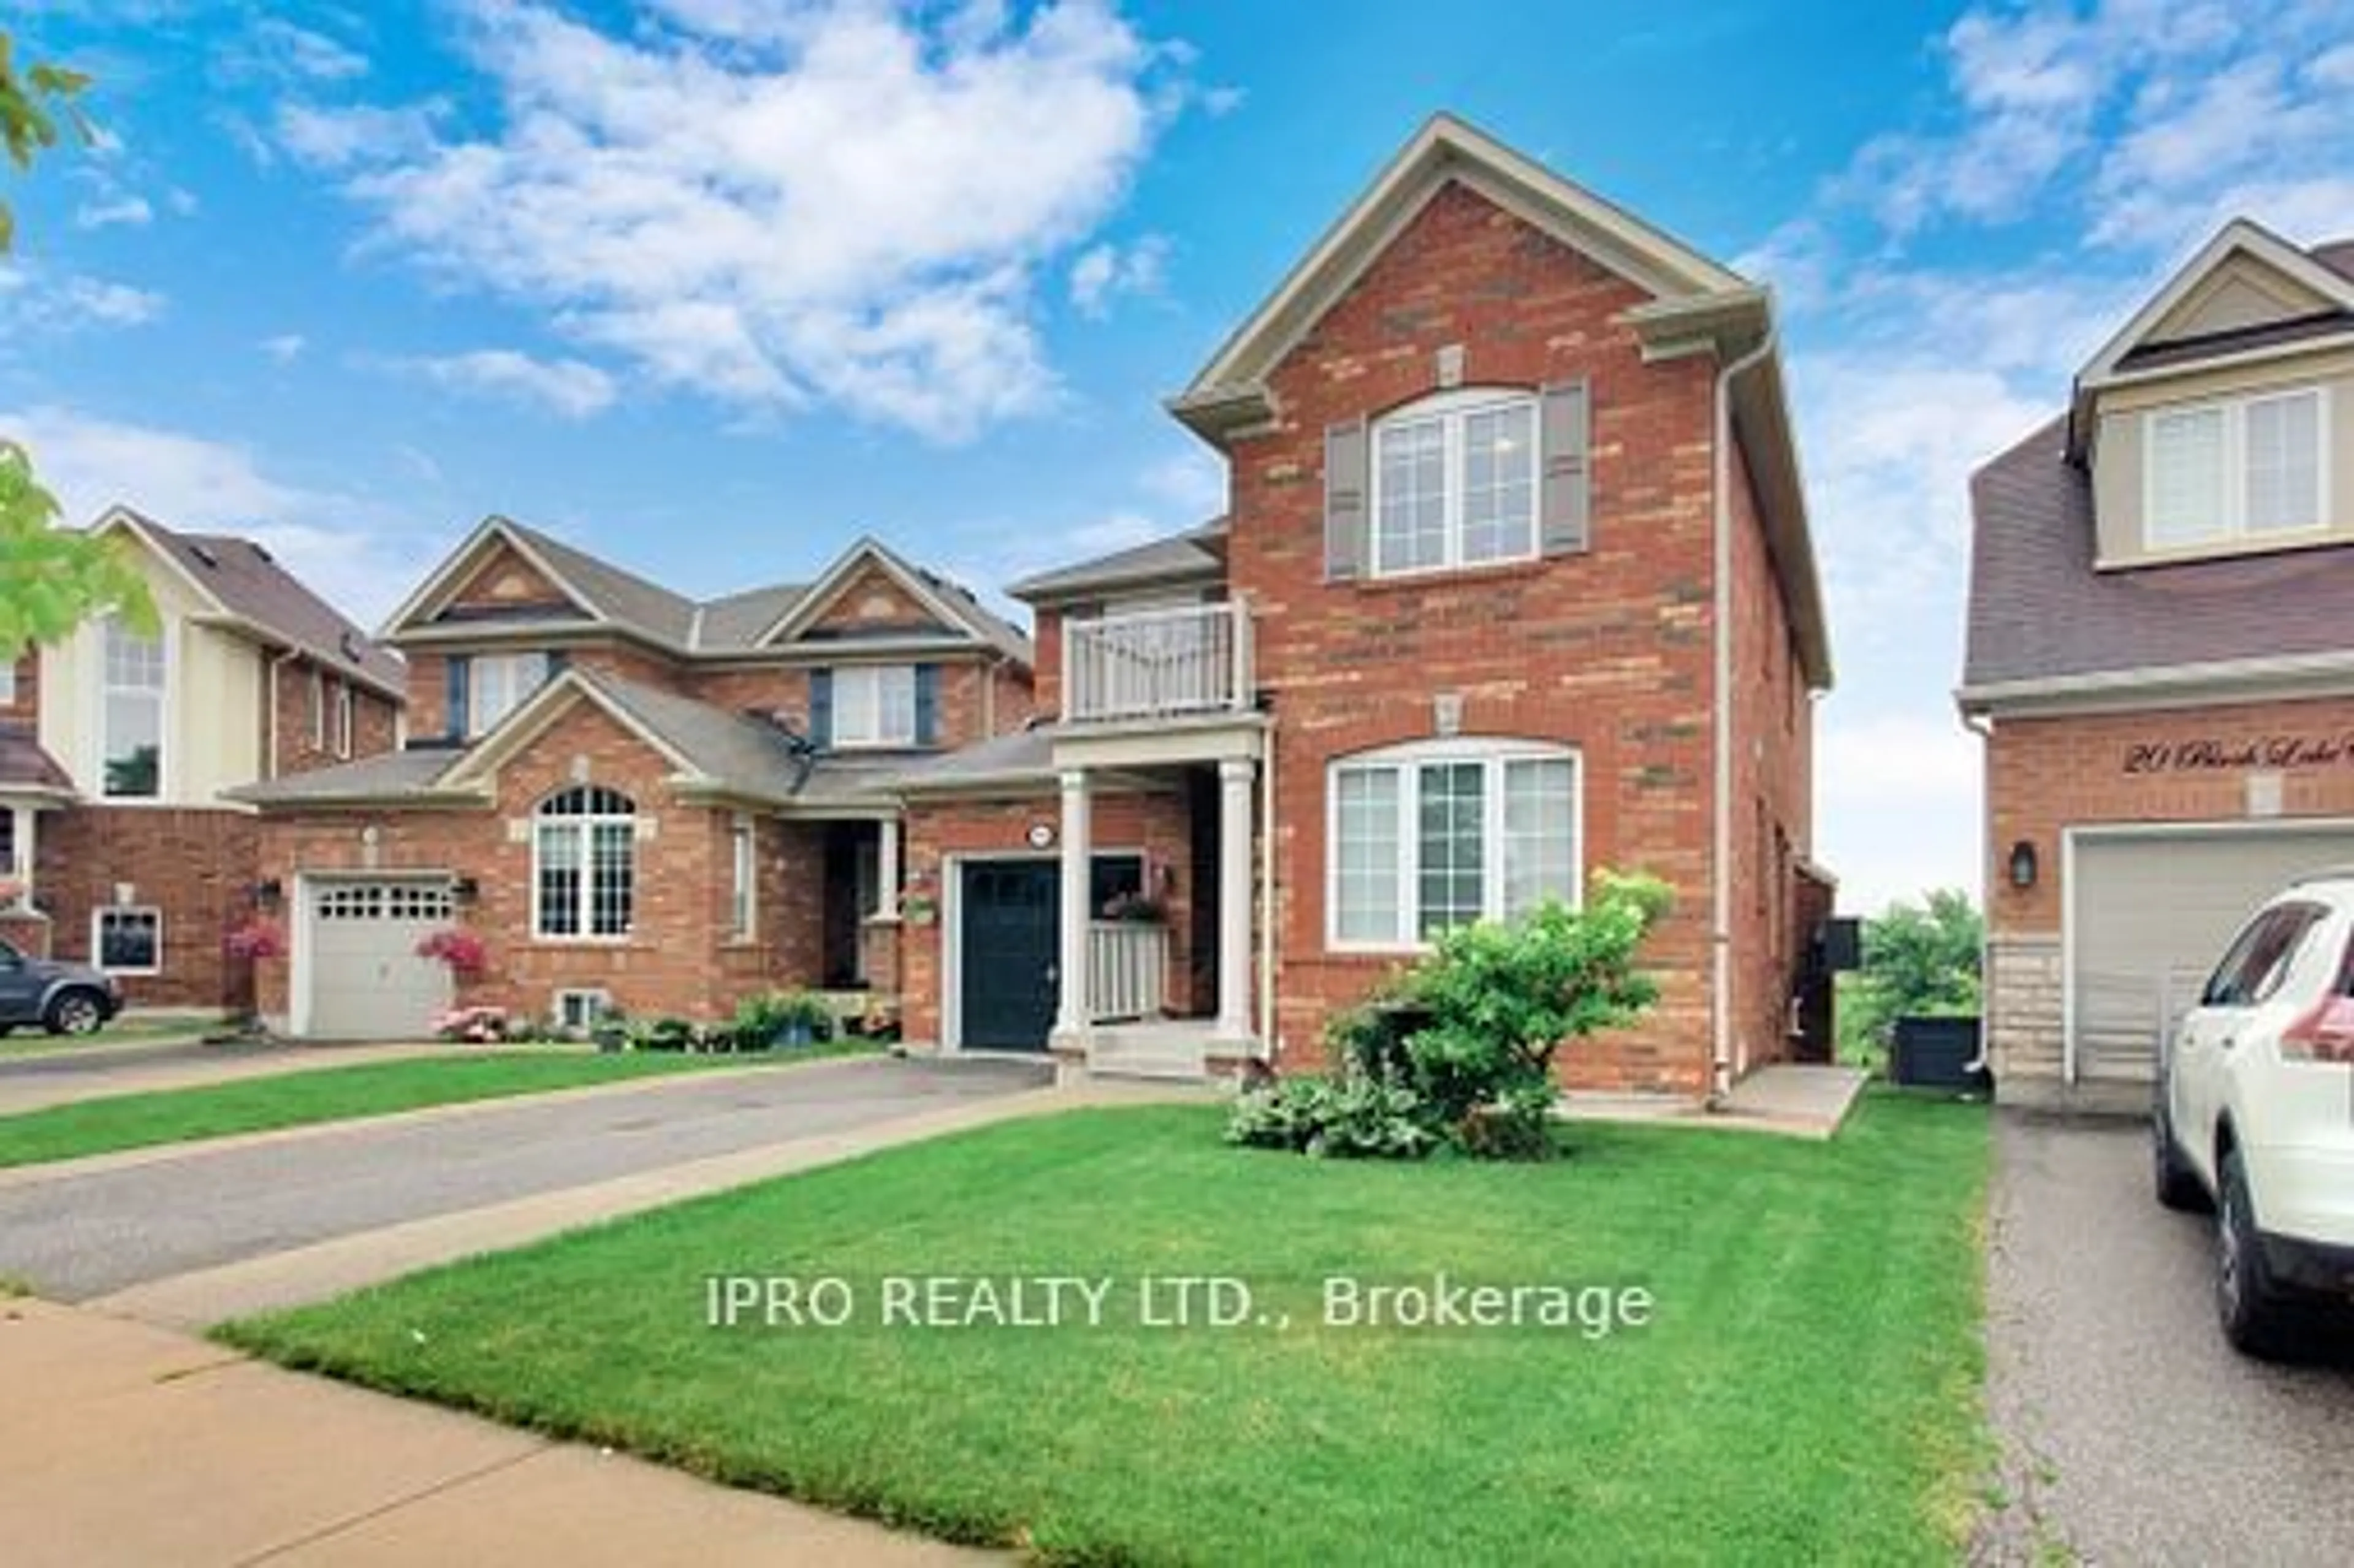 Home with brick exterior material for 18 Birch Lake Crt, Brampton Ontario L6P 3M6